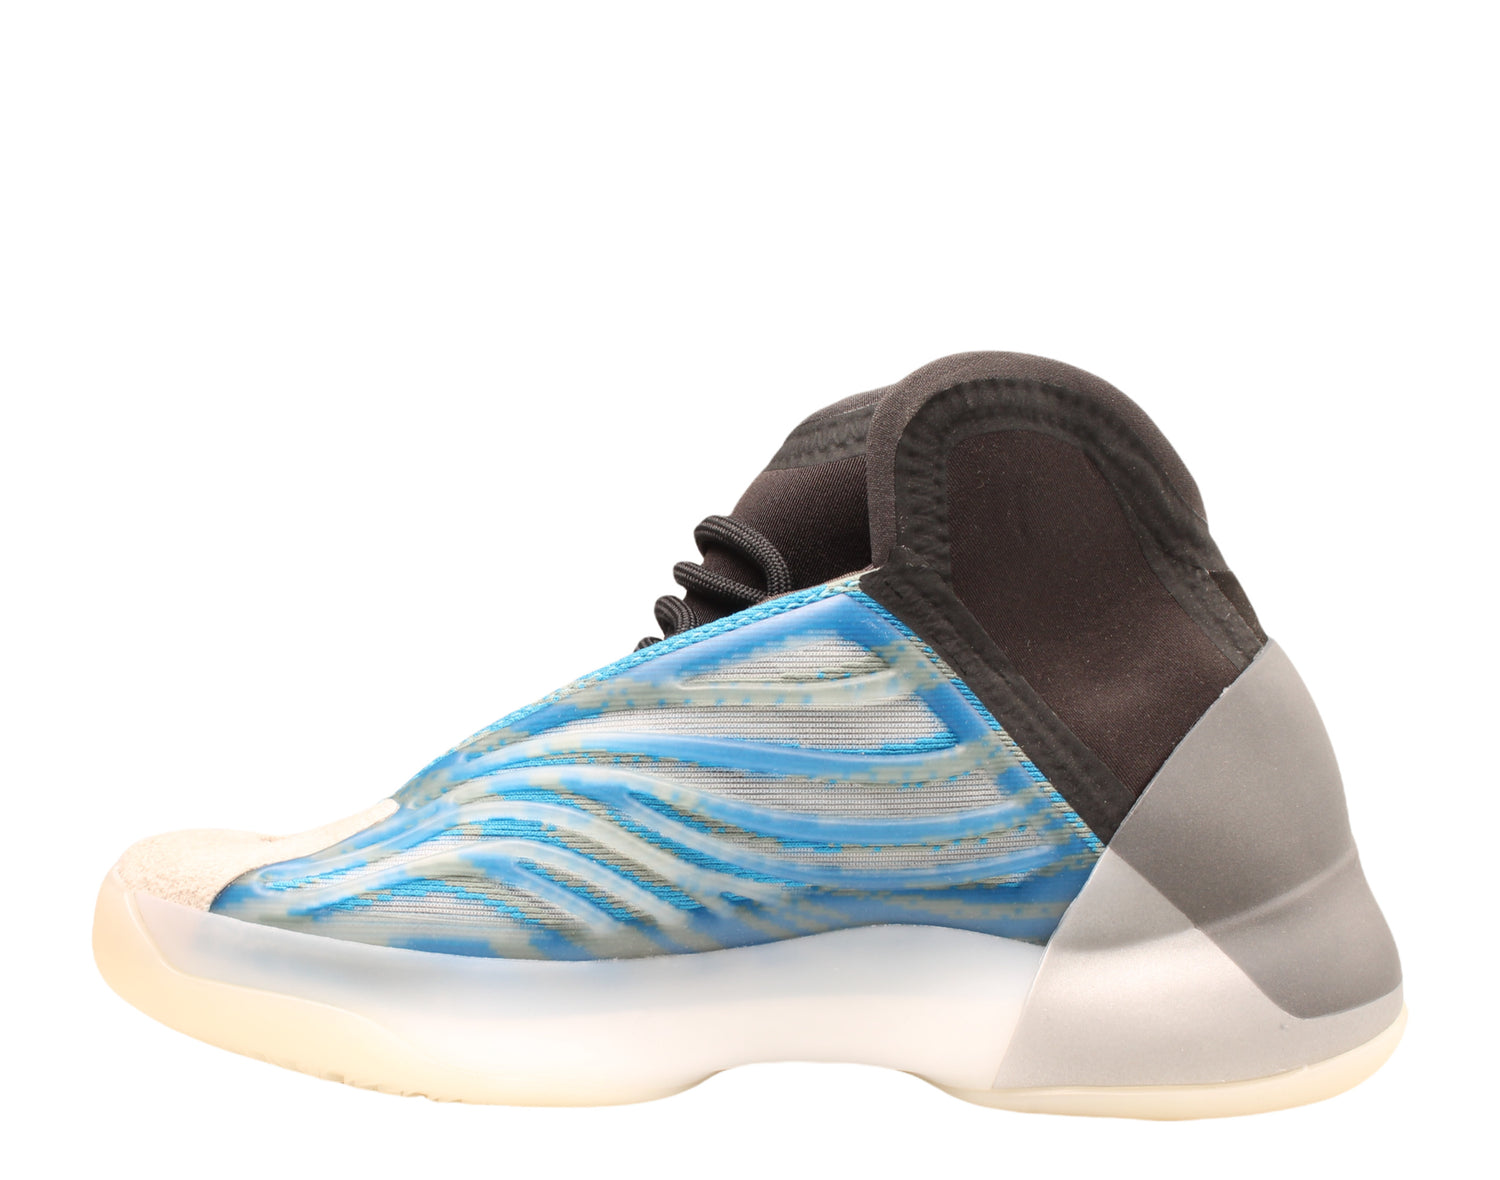 Adidas Yeezy Quantum Men's Shoes